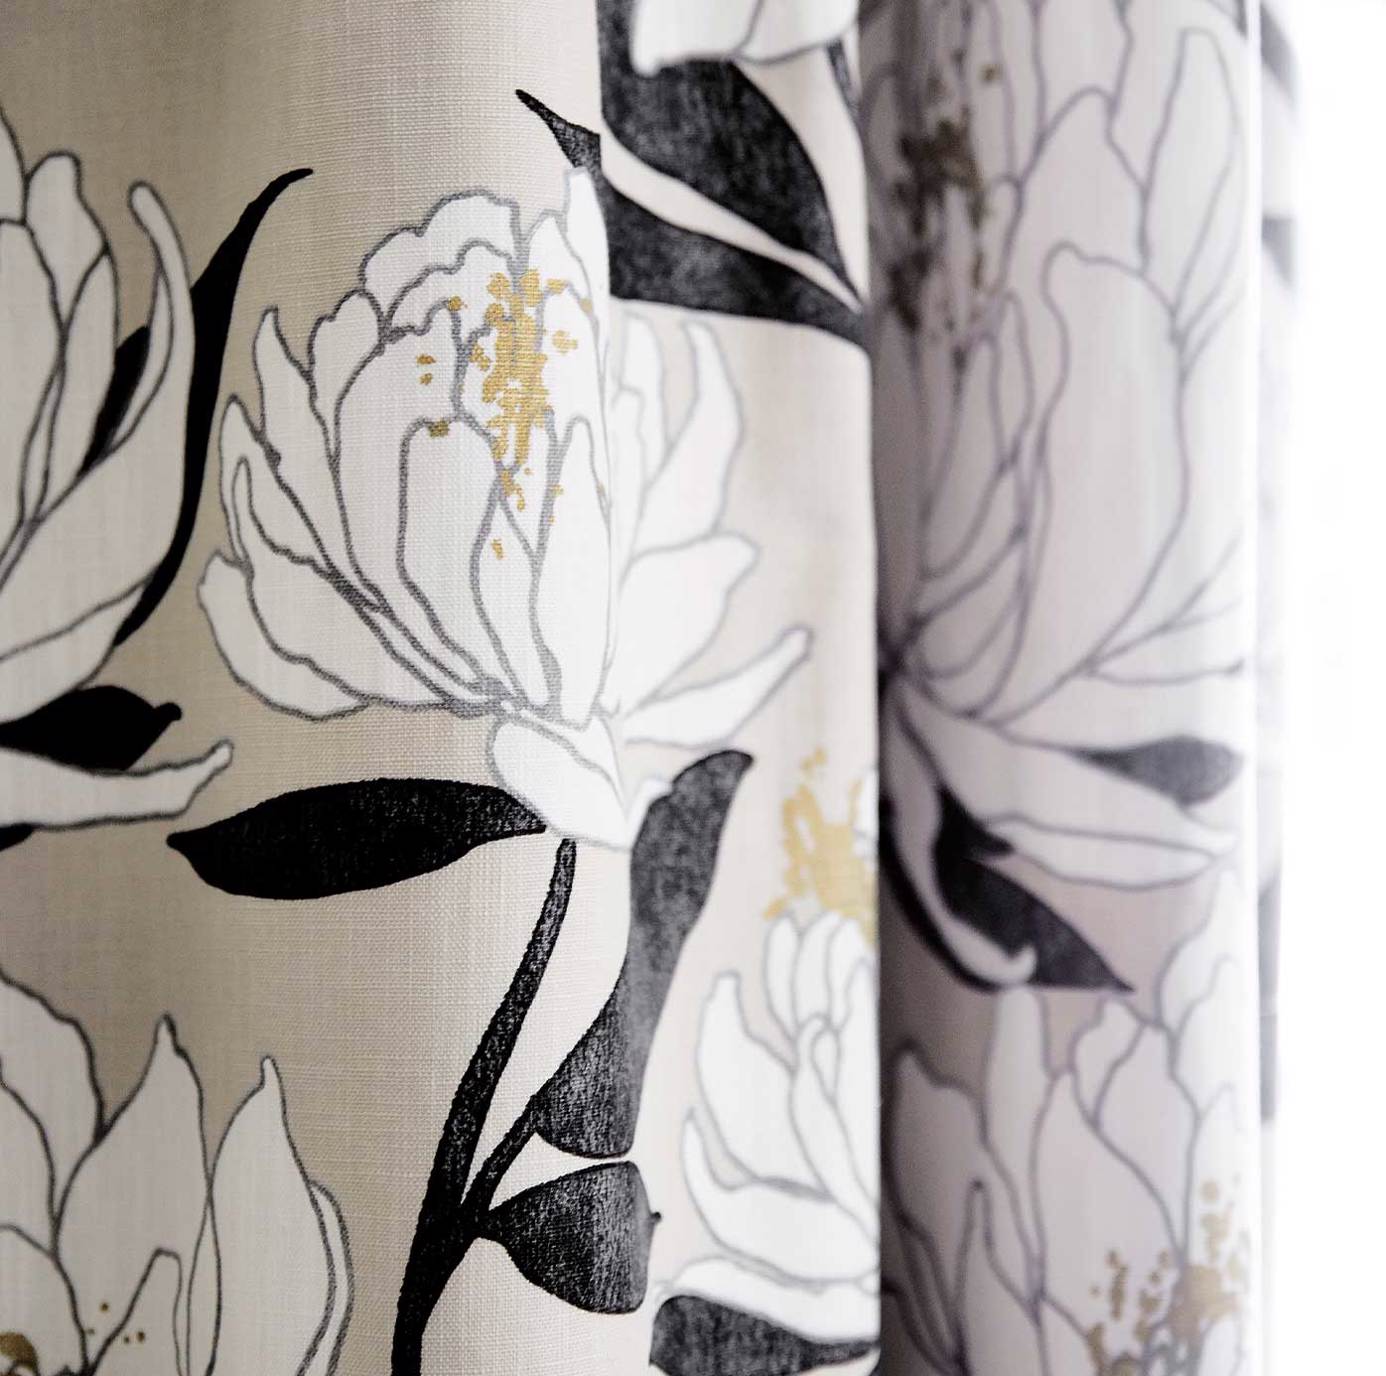 Sebal Midnight / Kingfisher Fabric by HAR